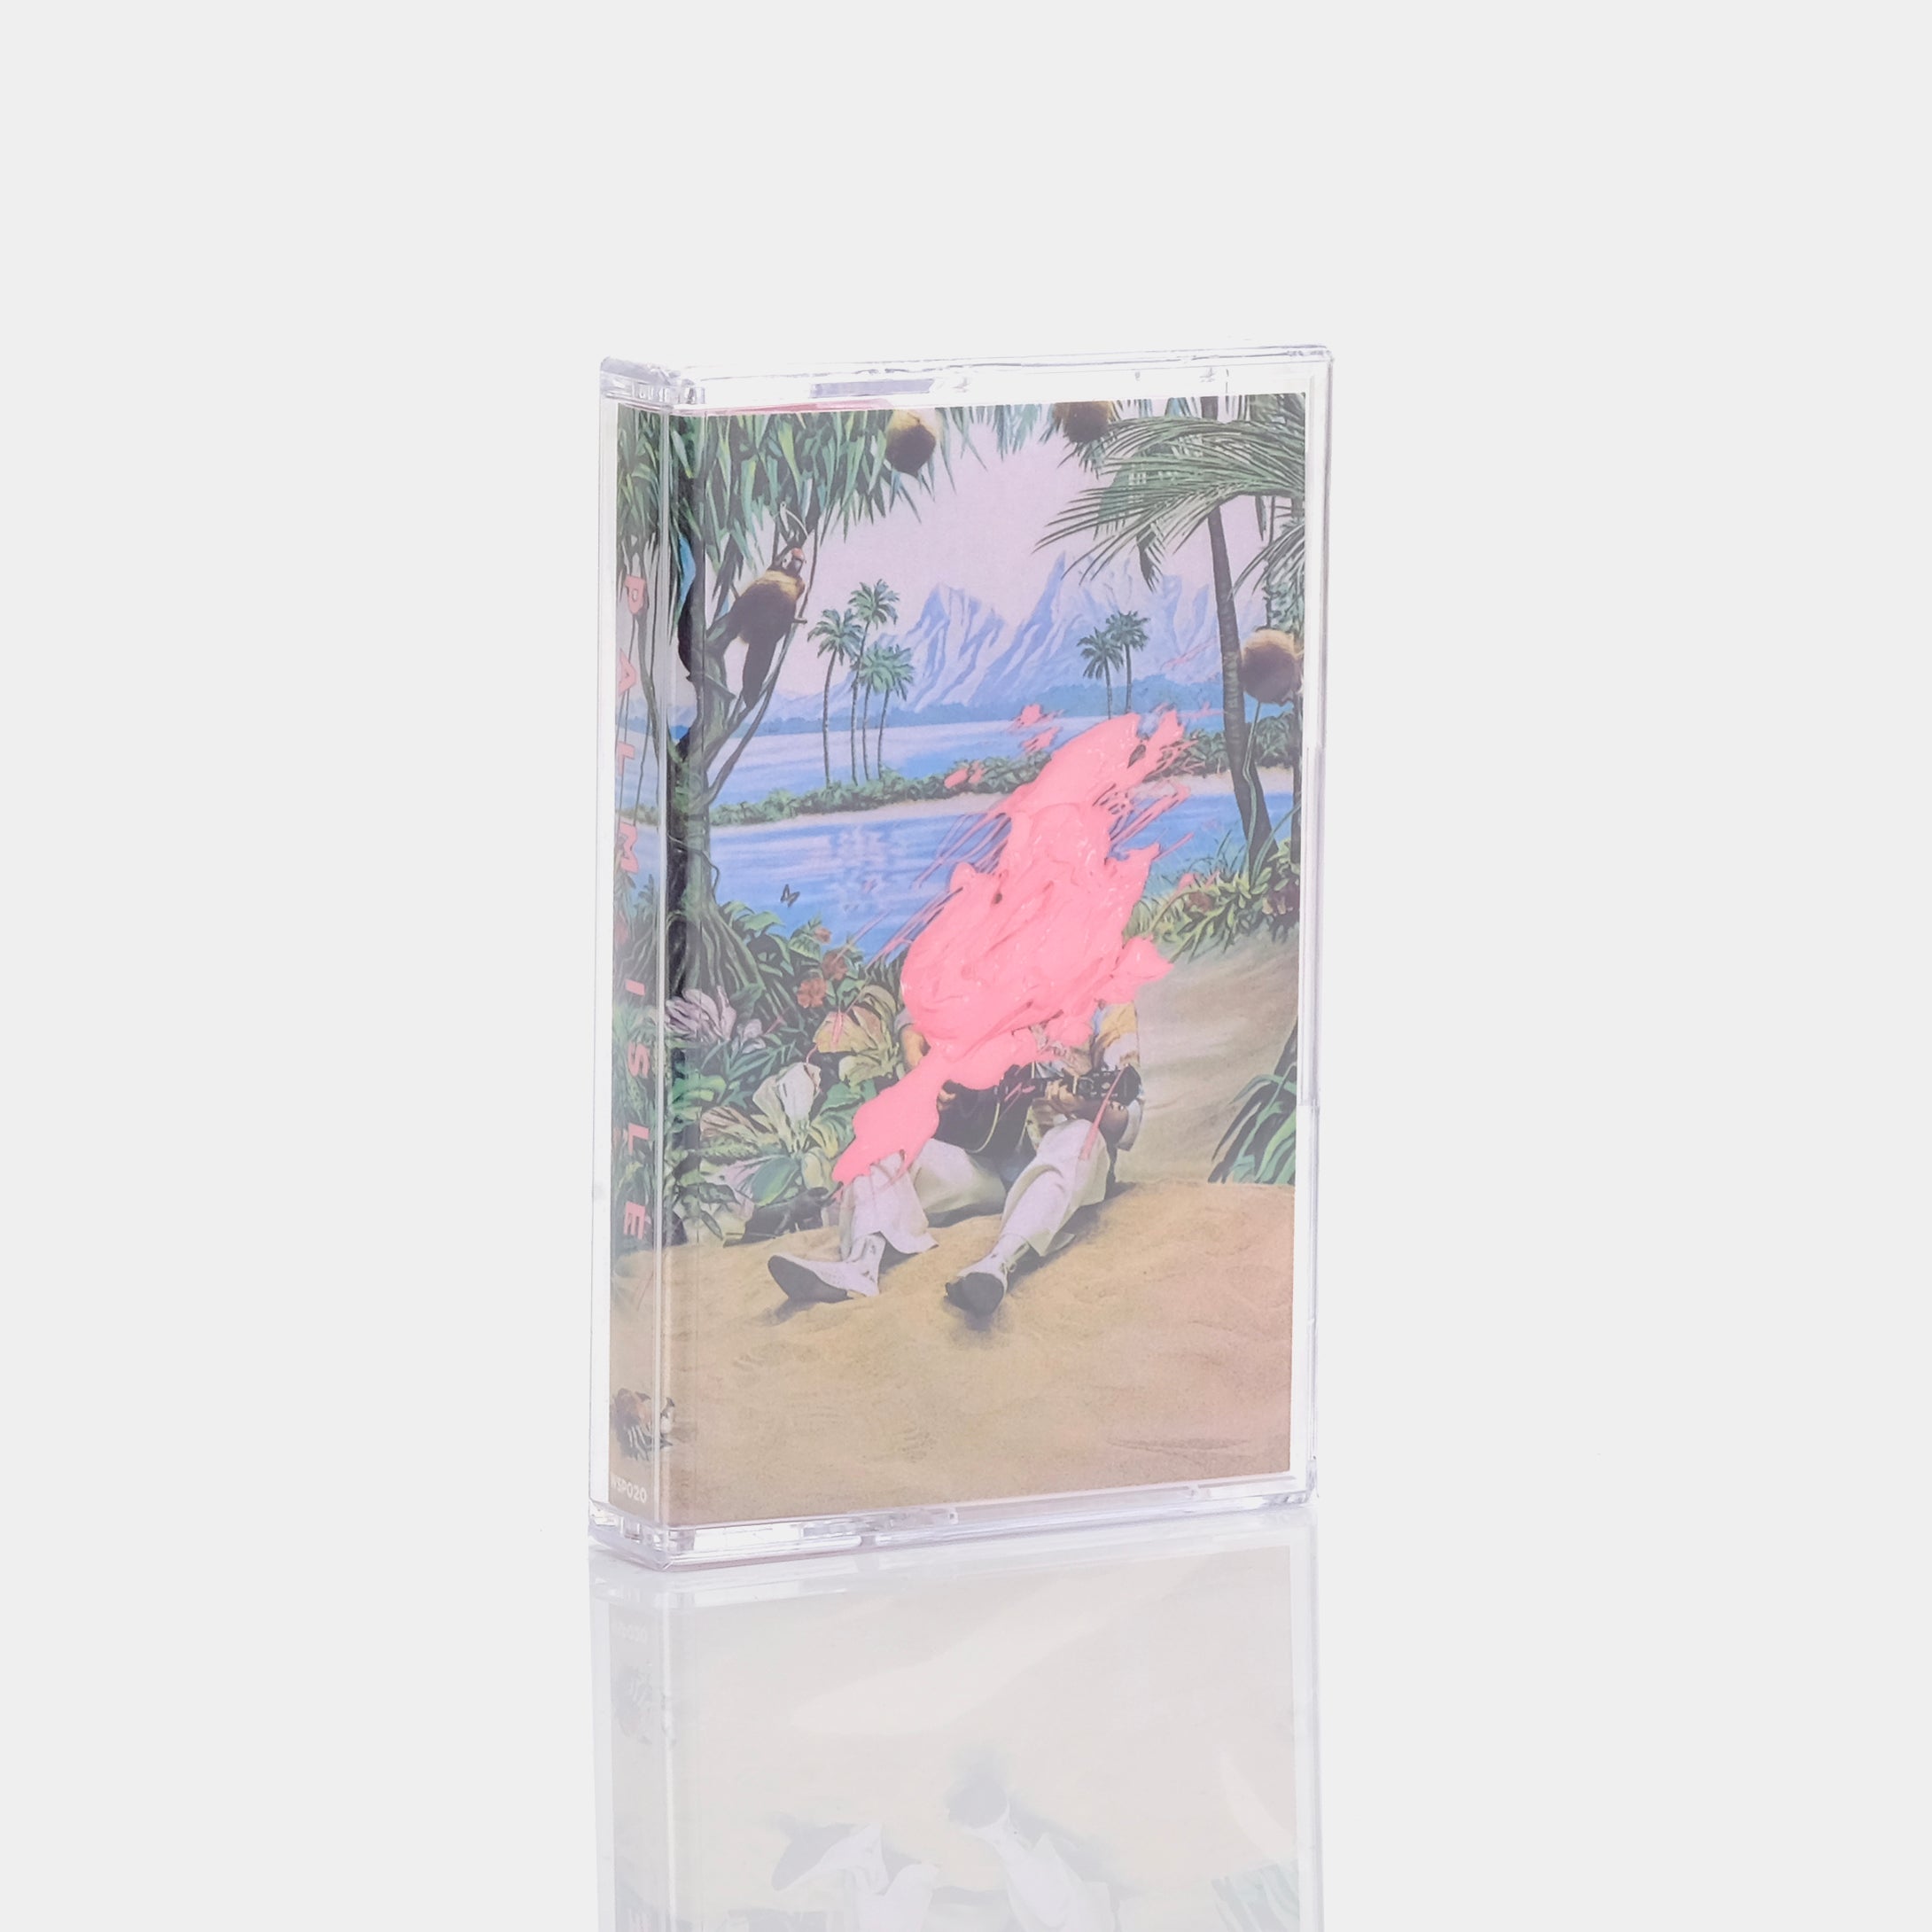 Max T - Palm Isle Cassette Tape